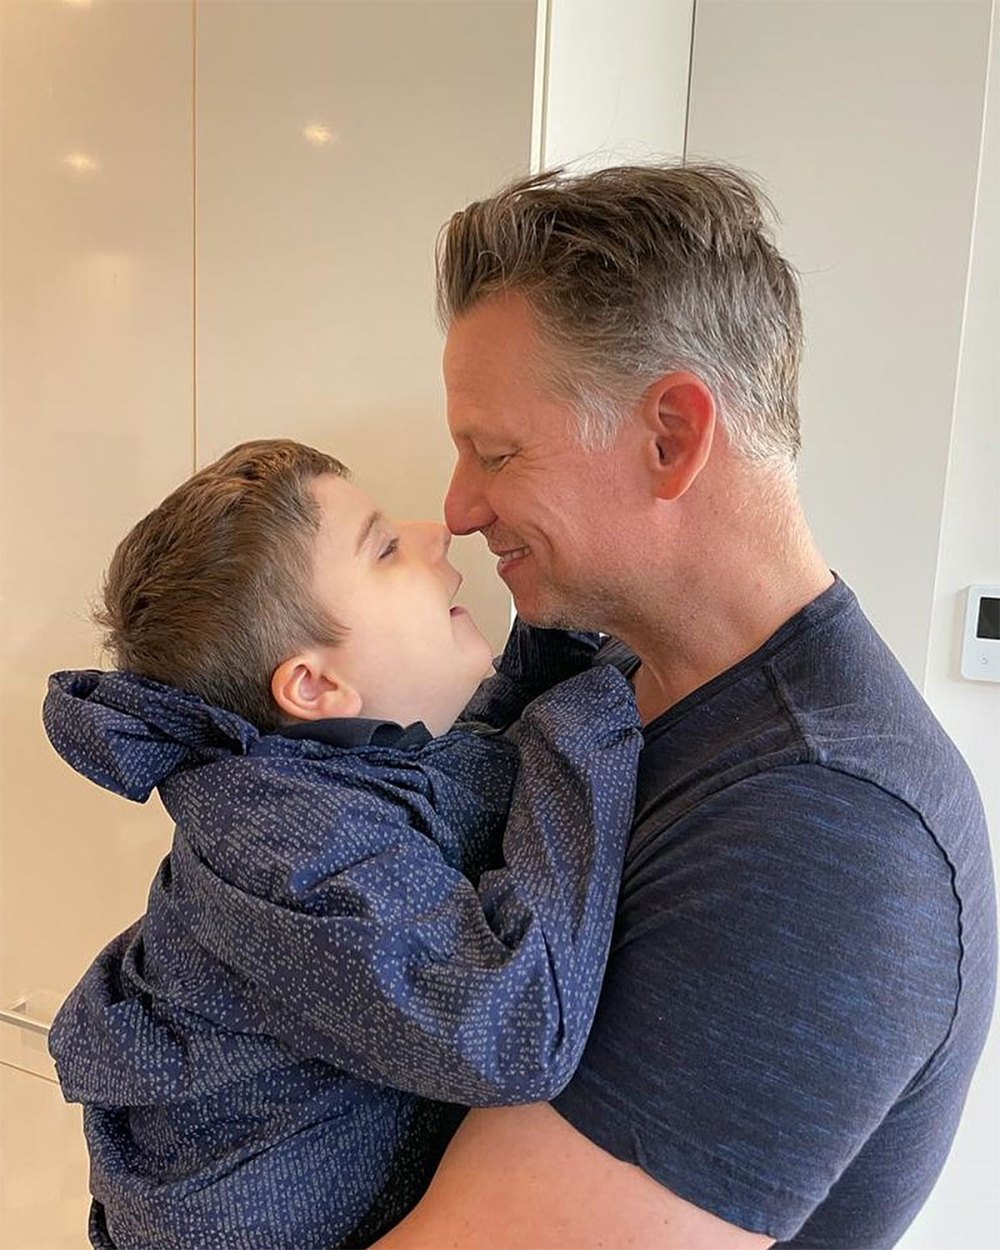 NBC Richard Engel Says Son Health Has Taken a Turn for the Worse